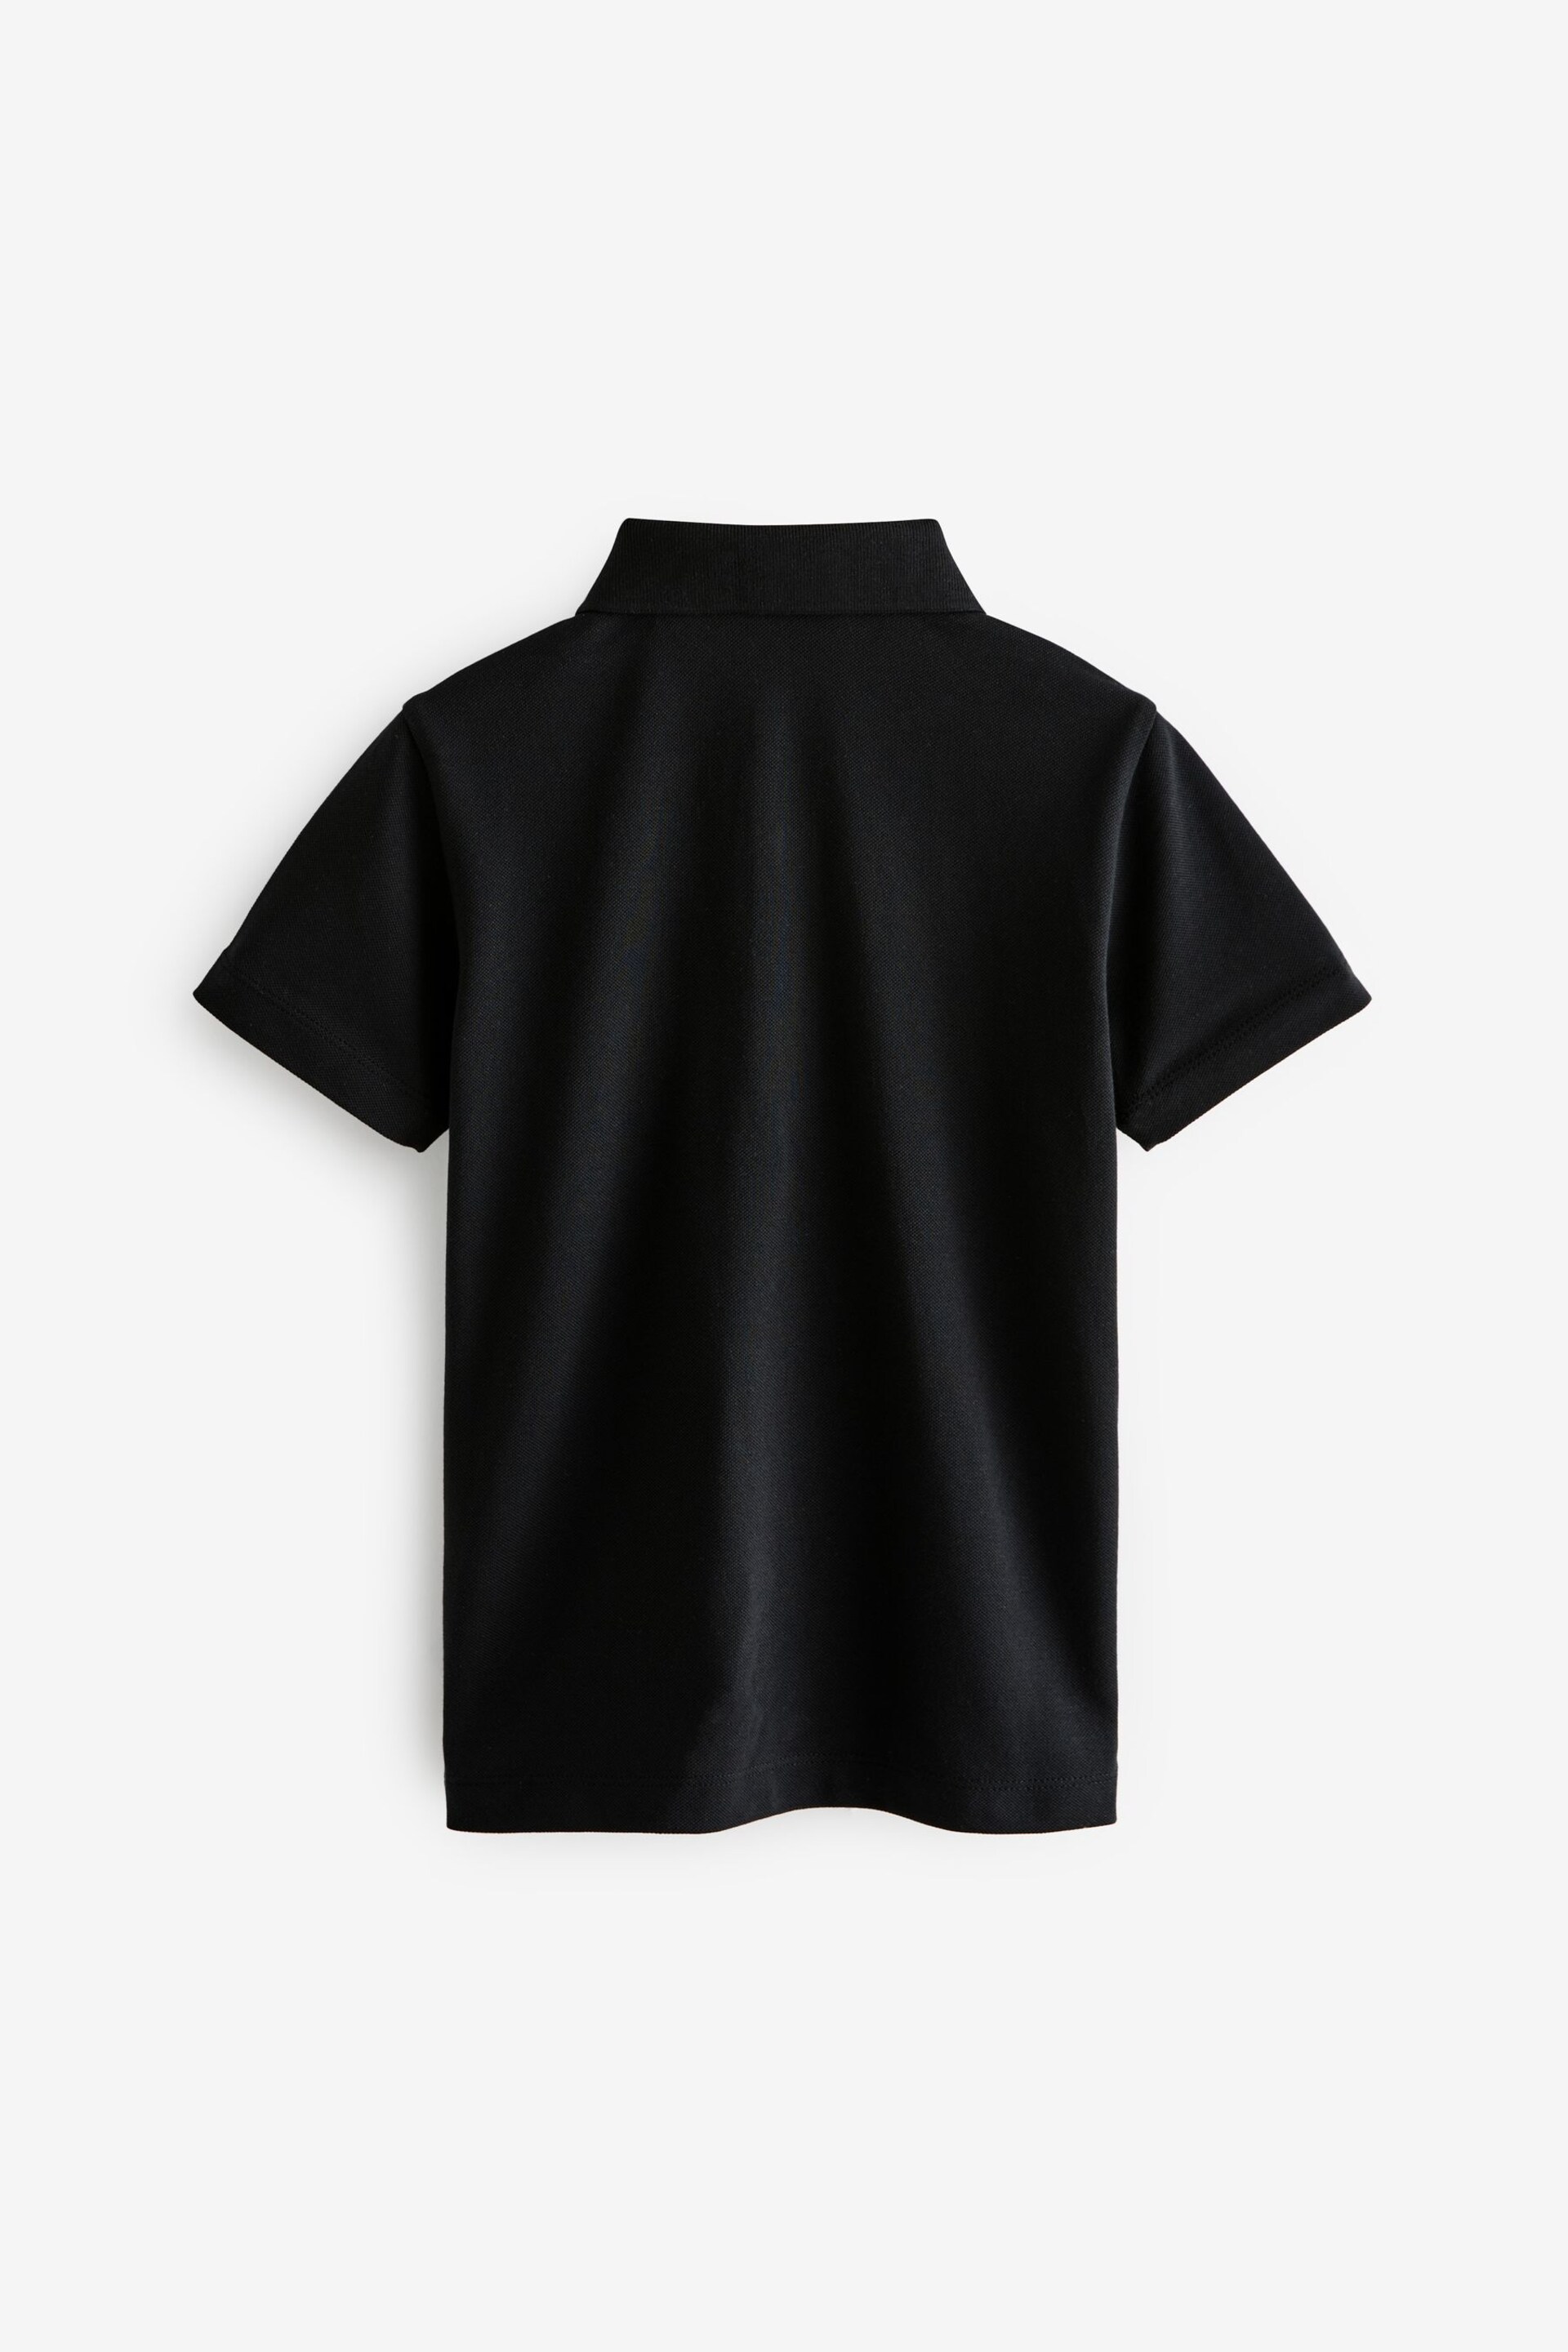 smALLSAINTS Black Short Sleeve Boys Polo Shirt - Image 6 of 7